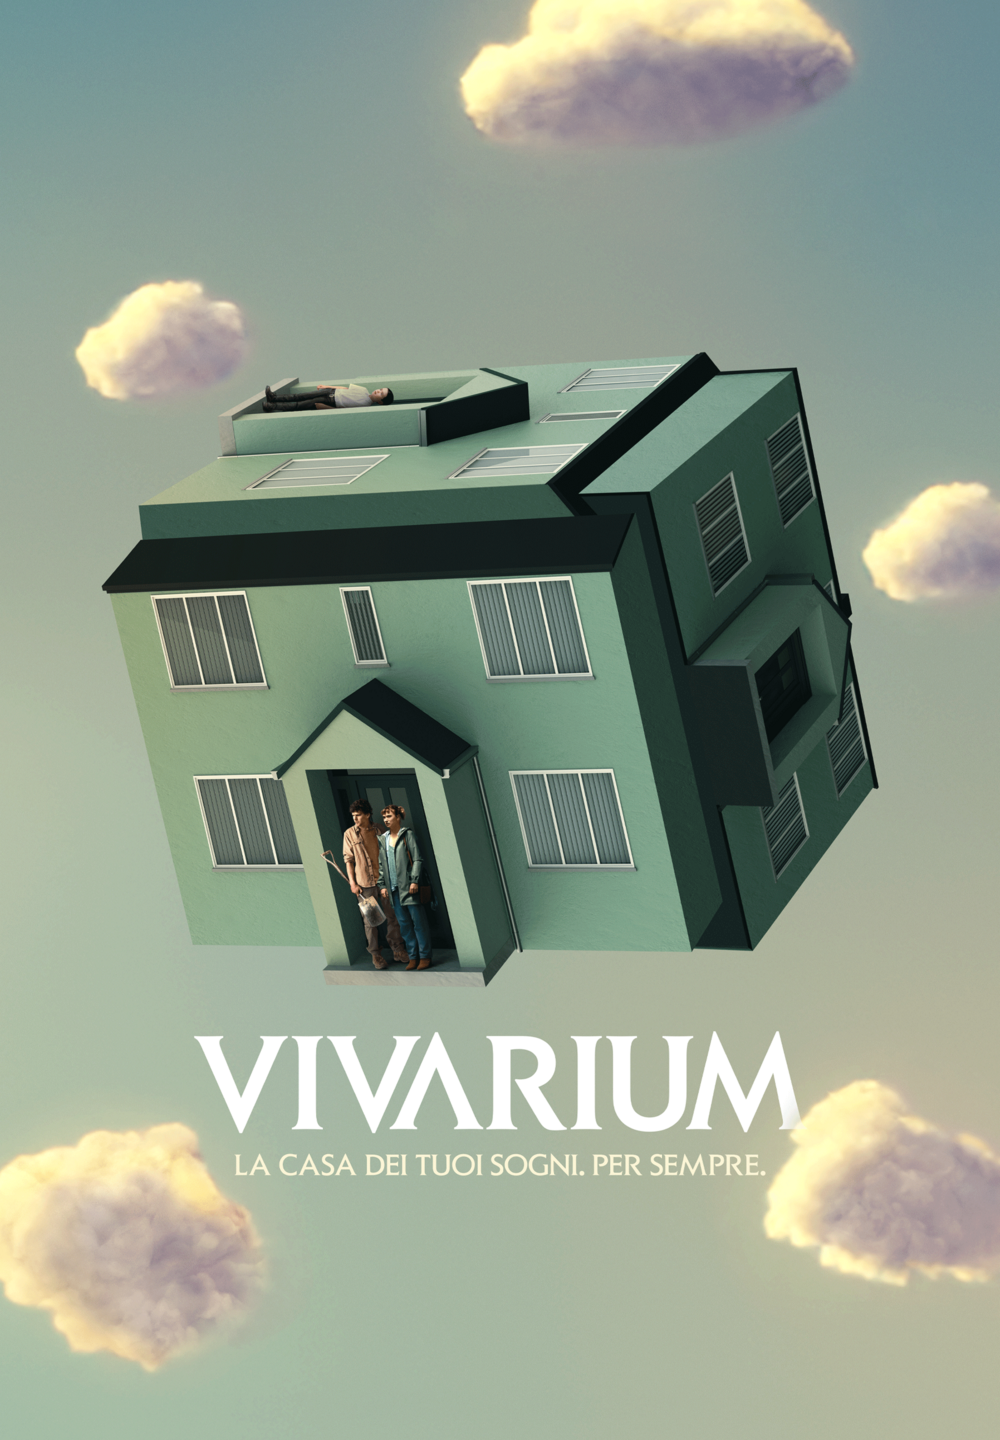 Vivarium [HD] (2019)